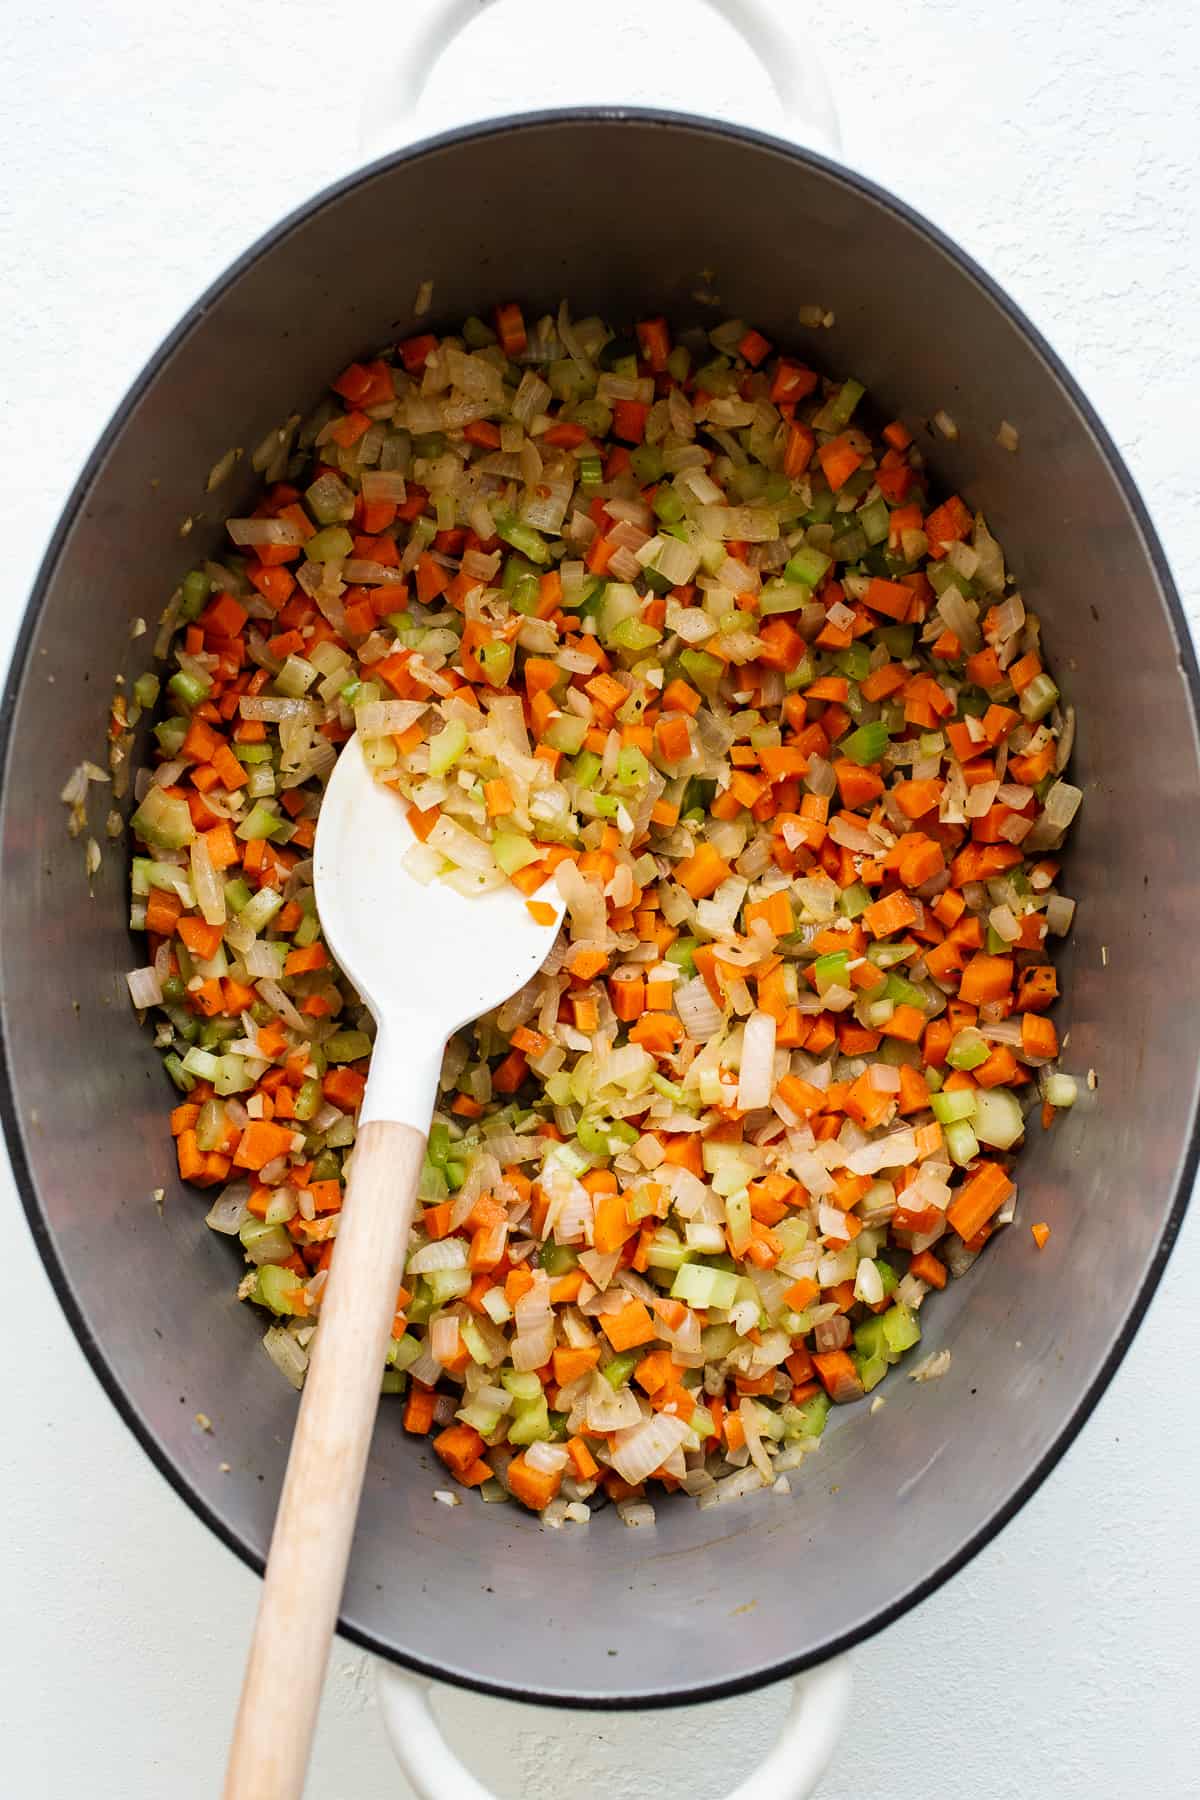 Minced veggies in a stock pot.